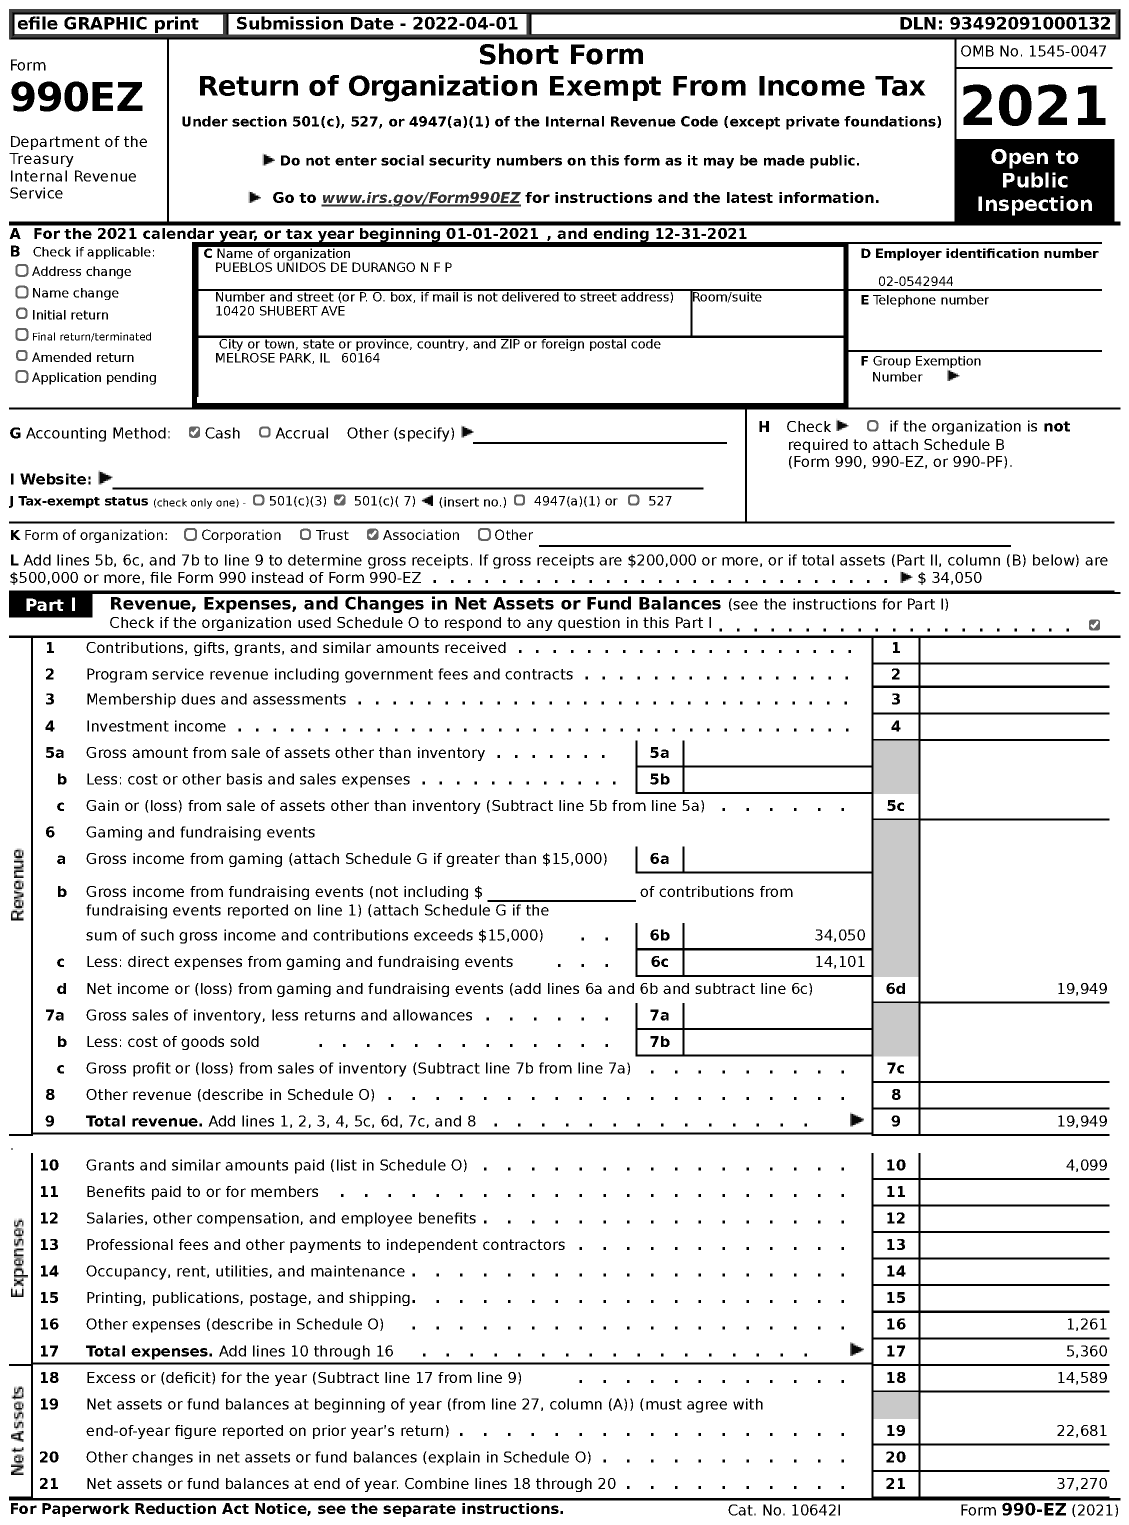 Image of first page of 2021 Form 990EZ for Pueblos Unidos de Durango N F P